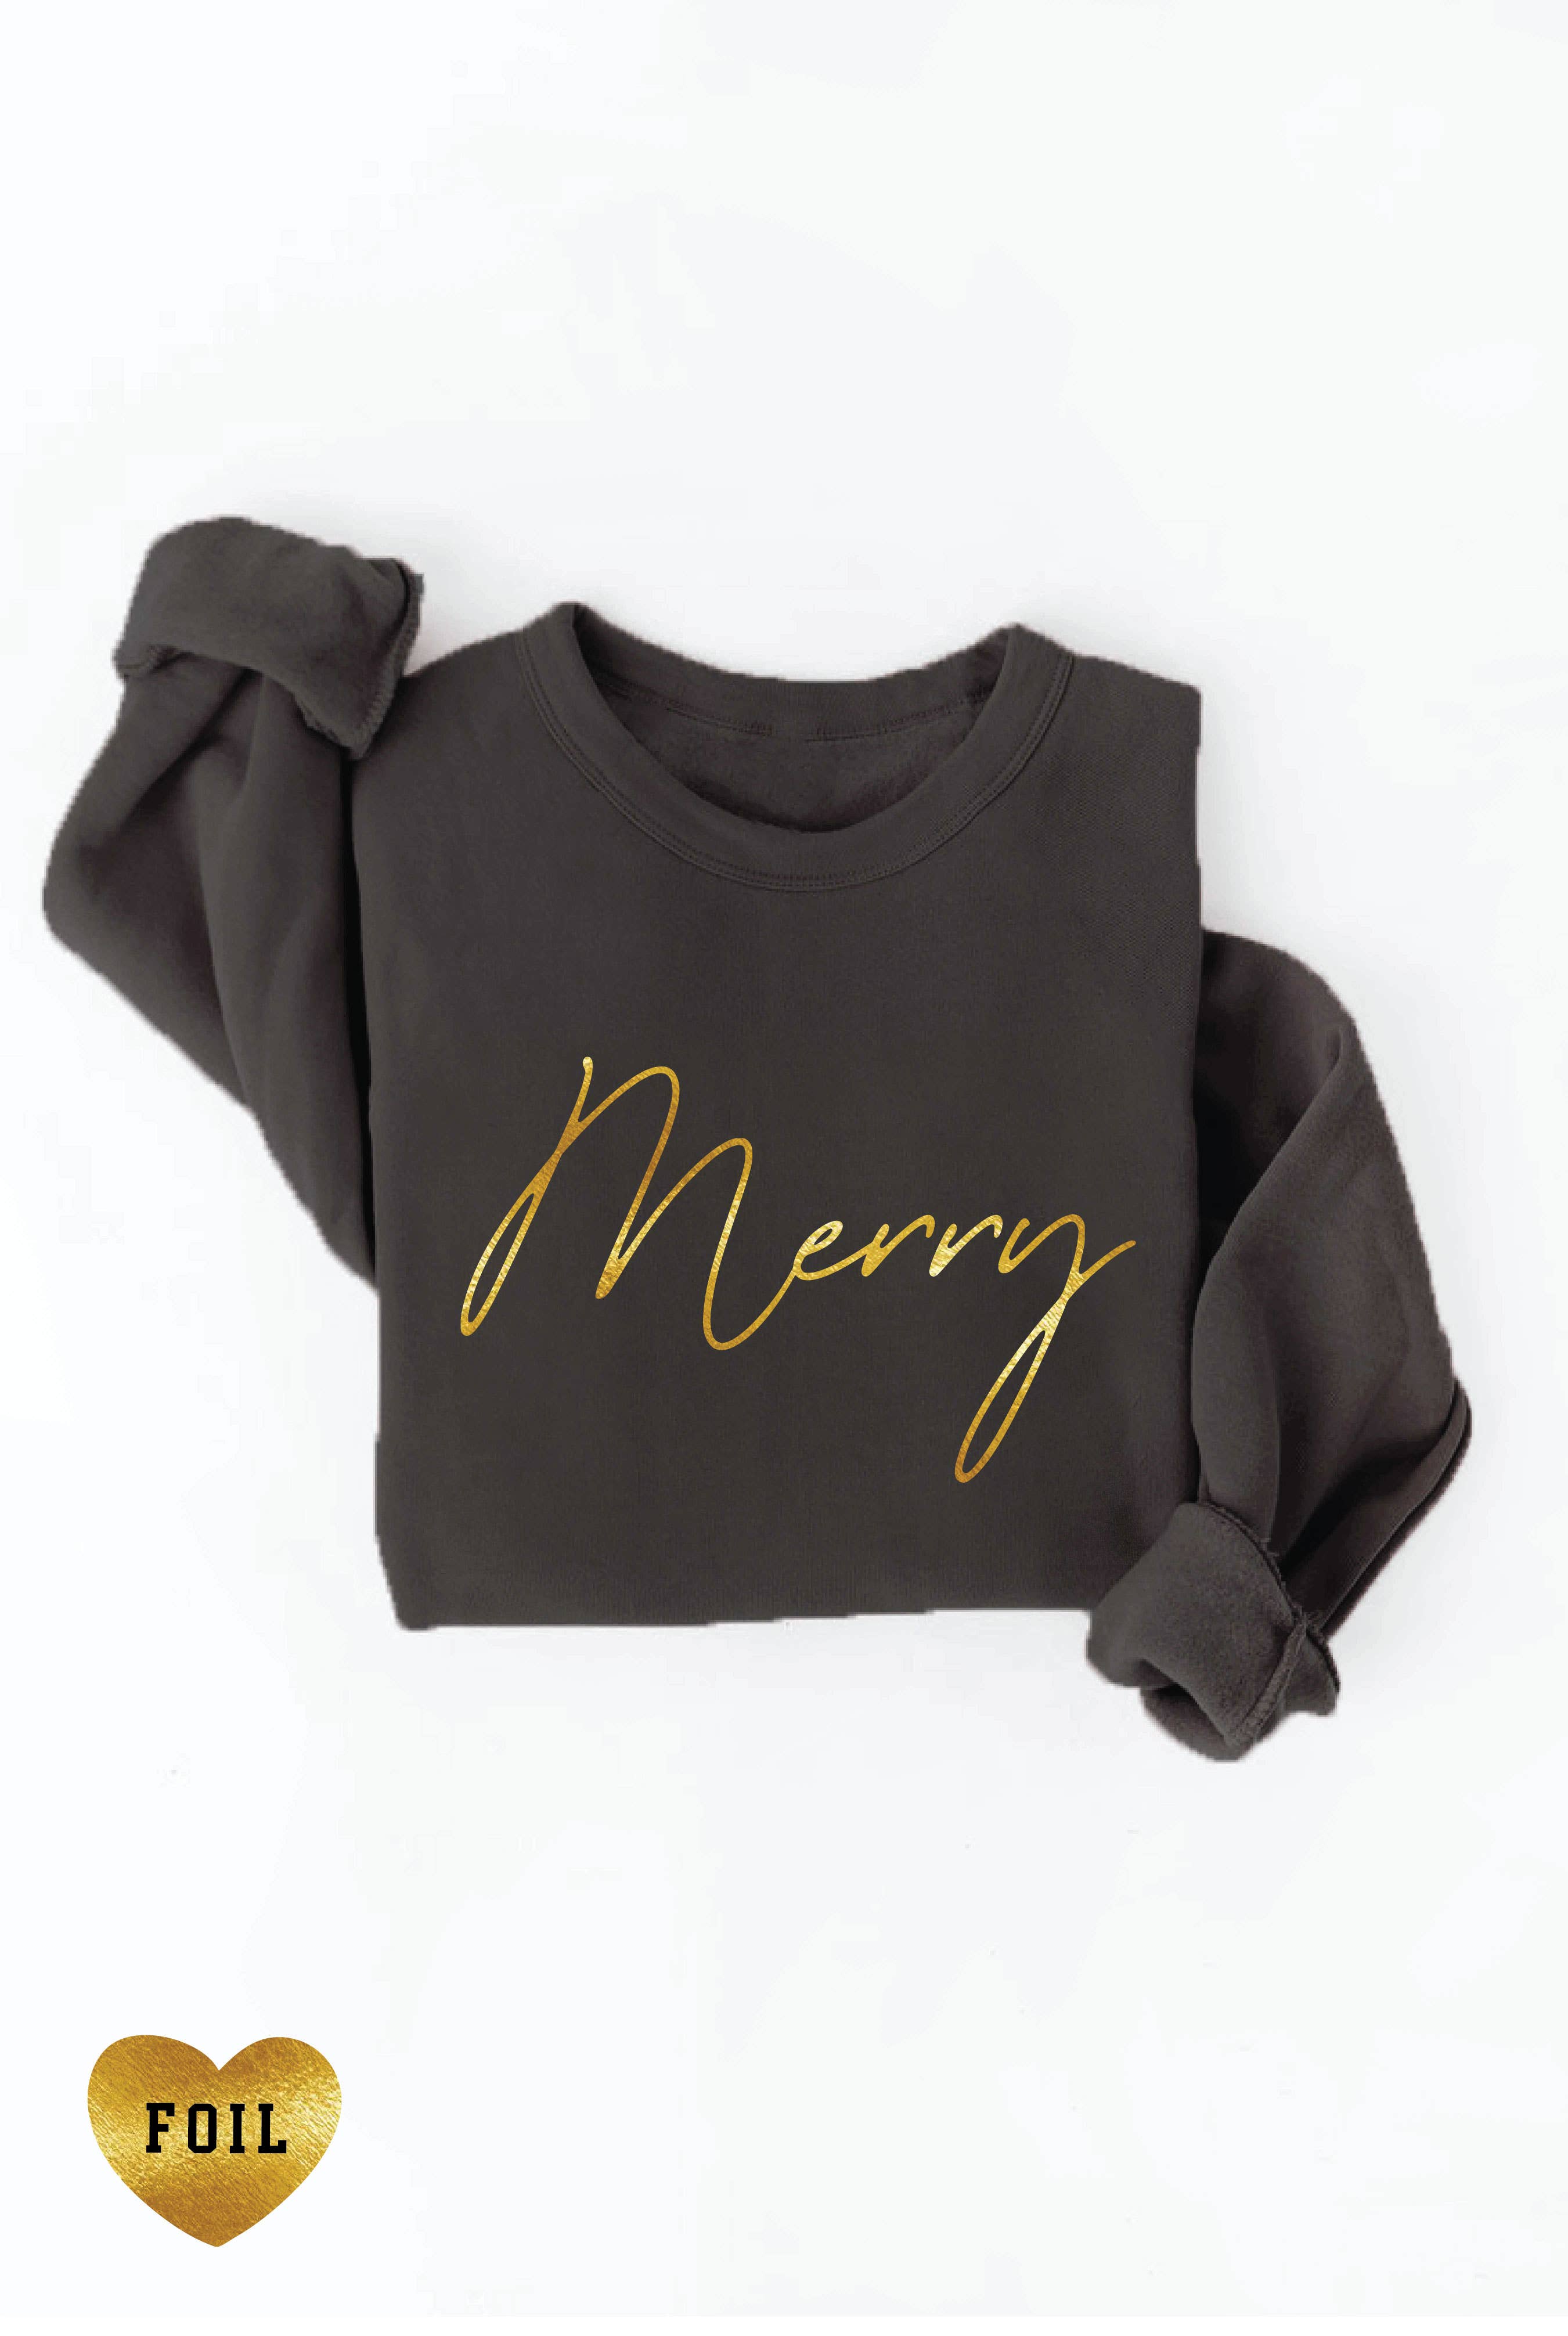 MERRY FOIL Graphic Sweatshirt: M / MAROON